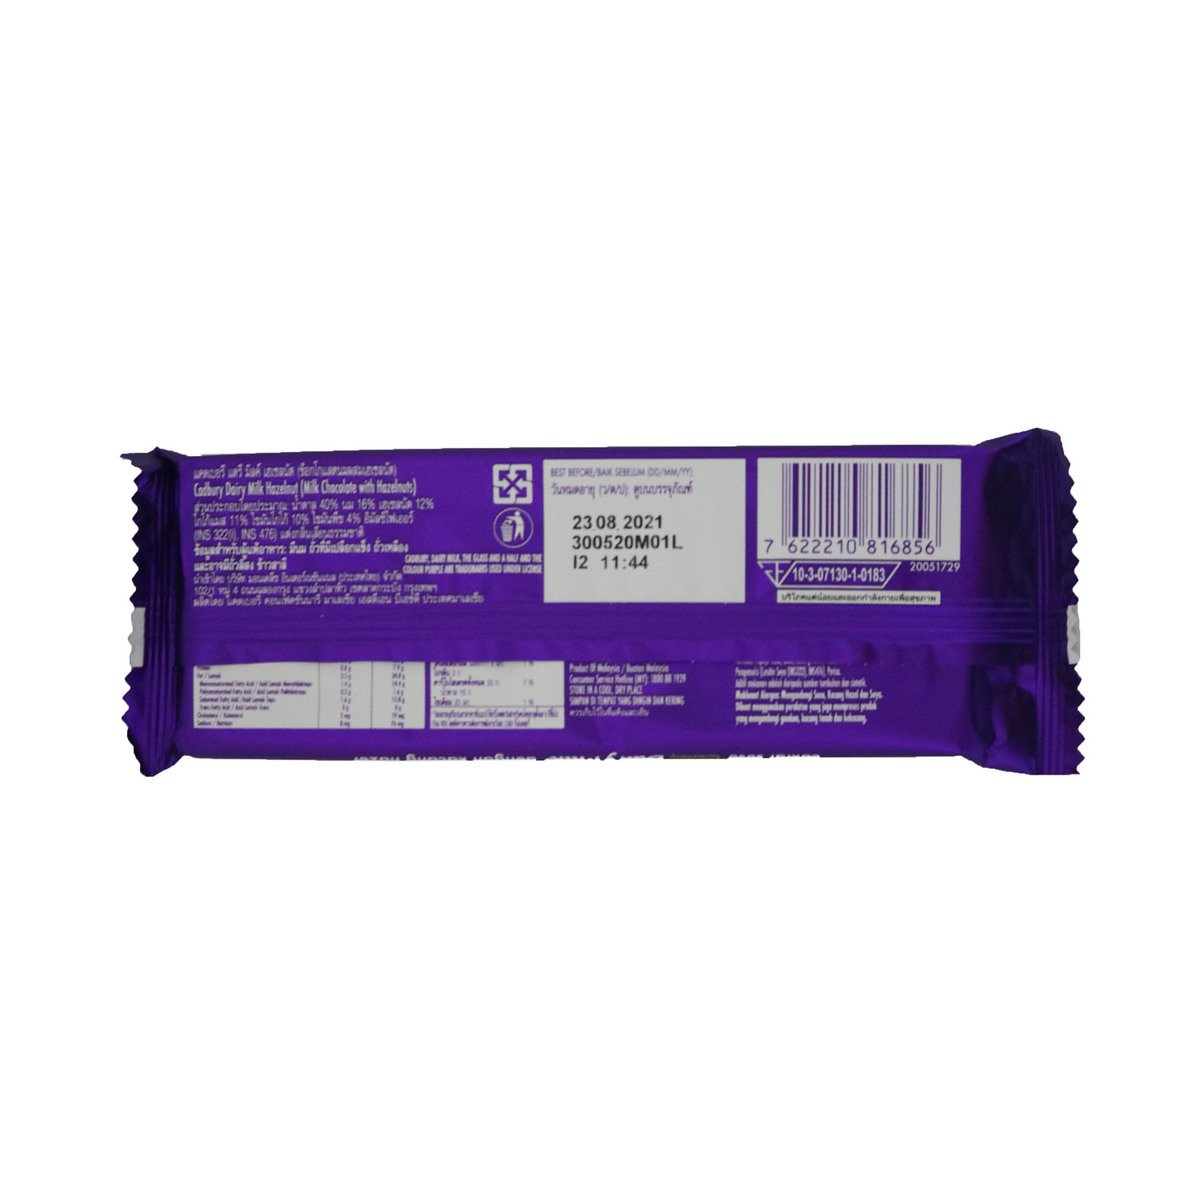 Cadbury Hazelnut 90g